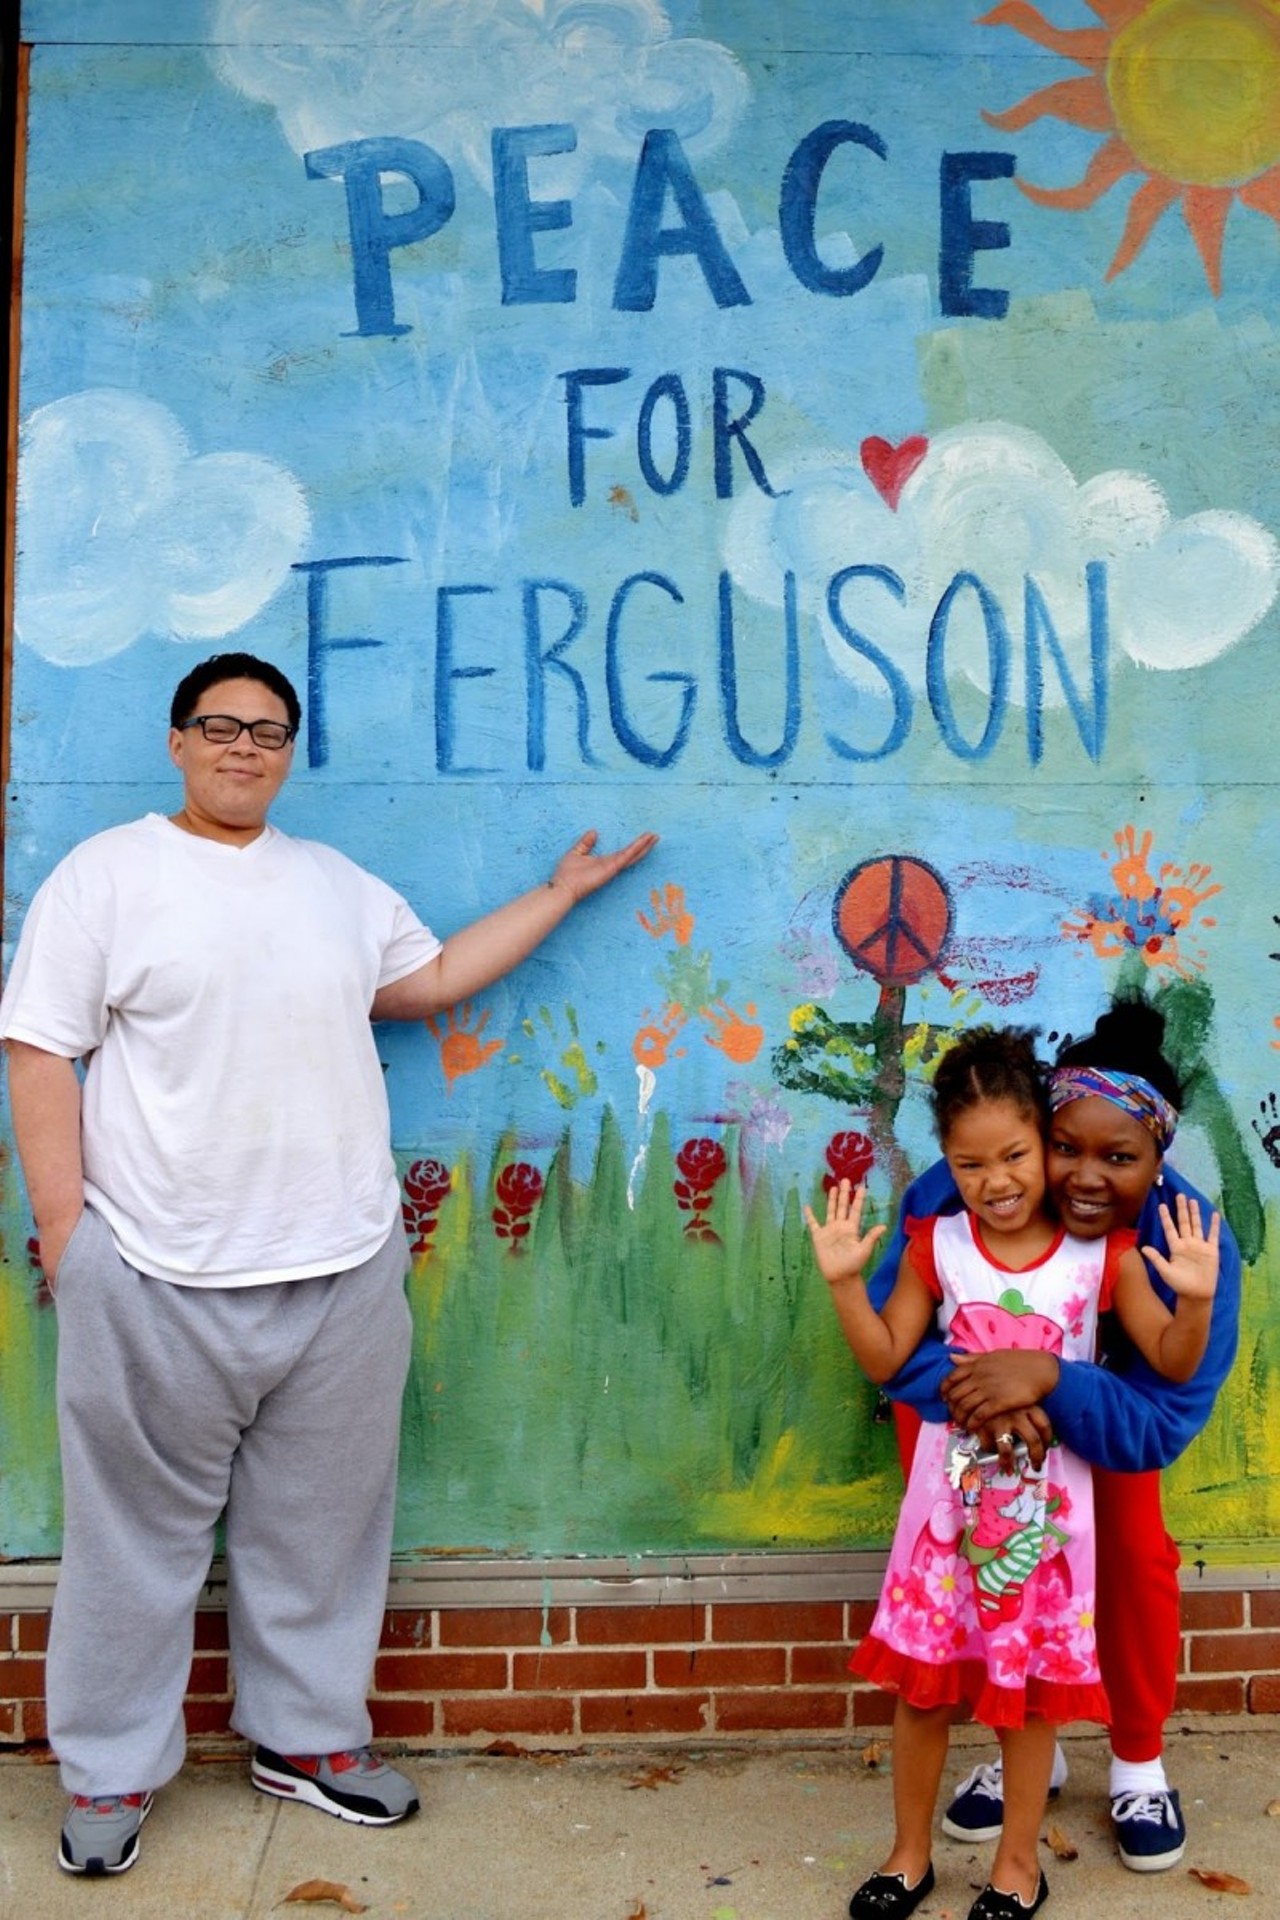 Photo by Evie Hemphill, taken November 2014 in Ferguson.